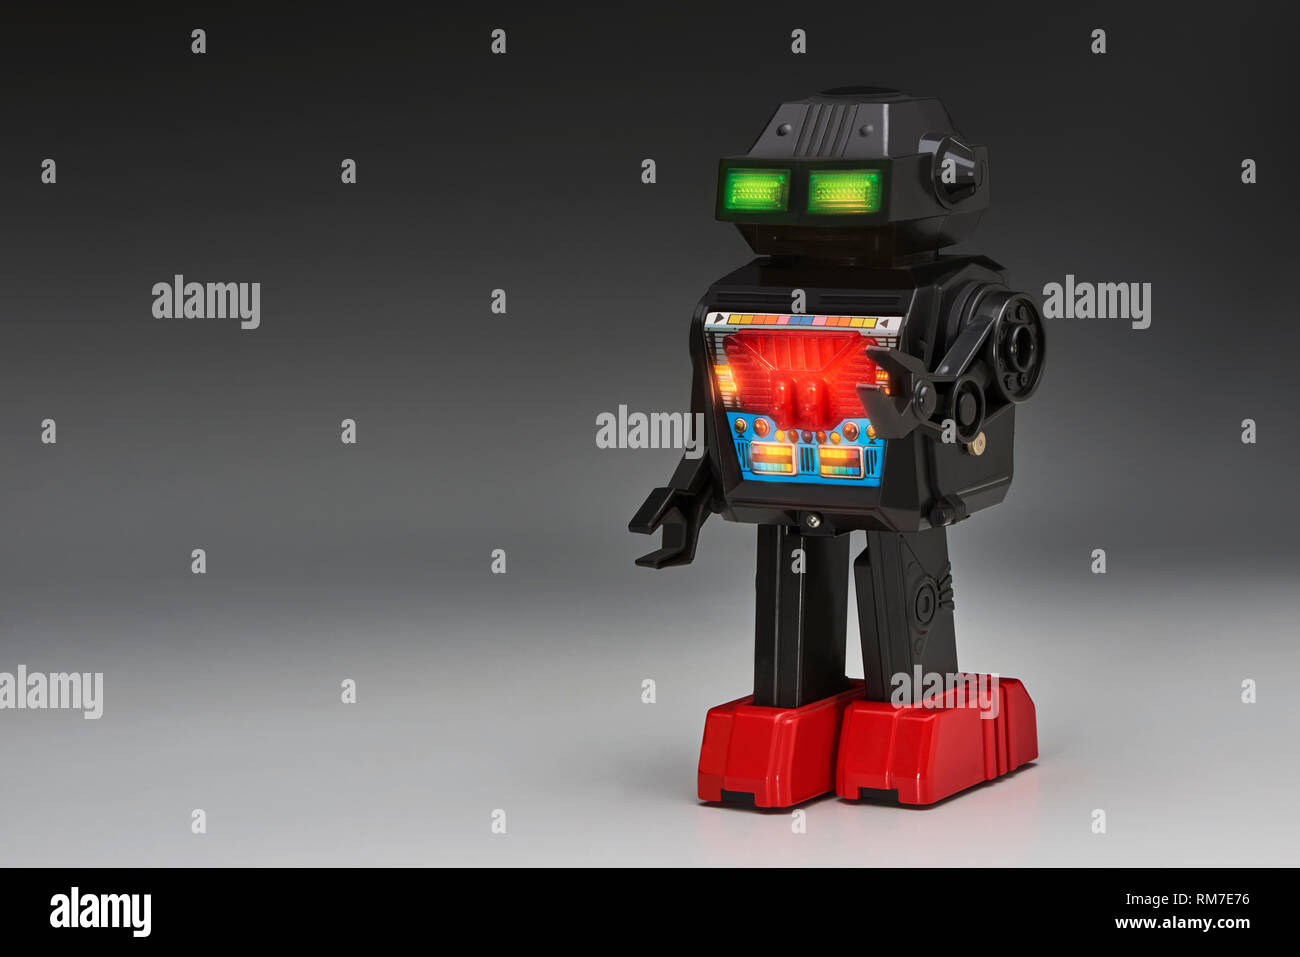 Robot with Illuminated Control Panel Stock Photo